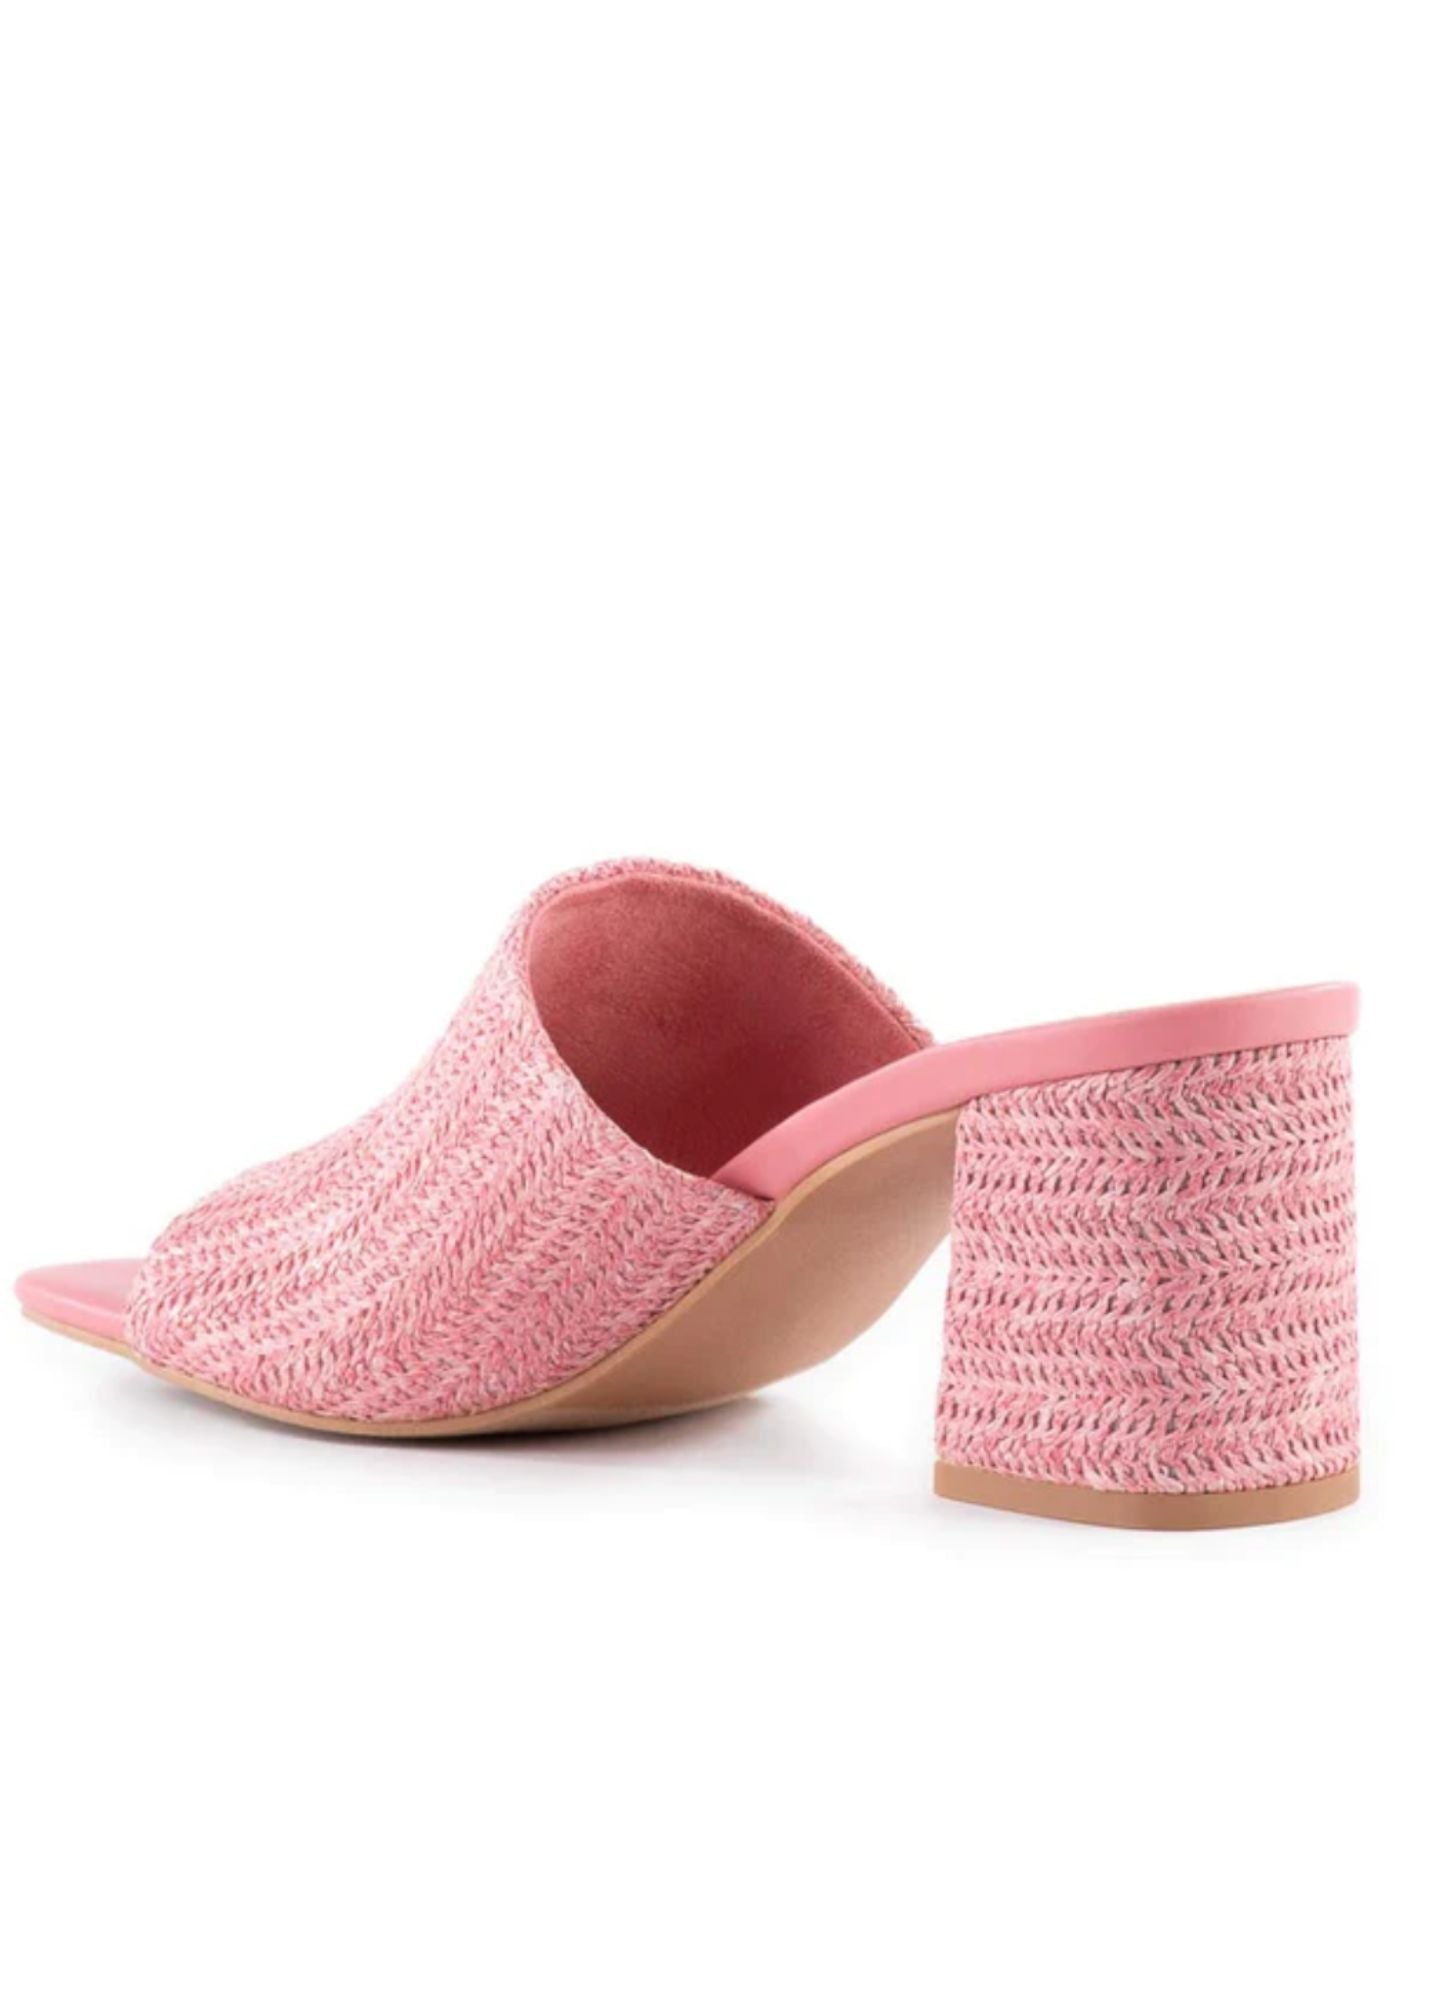 Seychelles® Adapt Pink Raffia Block Heel - FINAL SALE Shoes